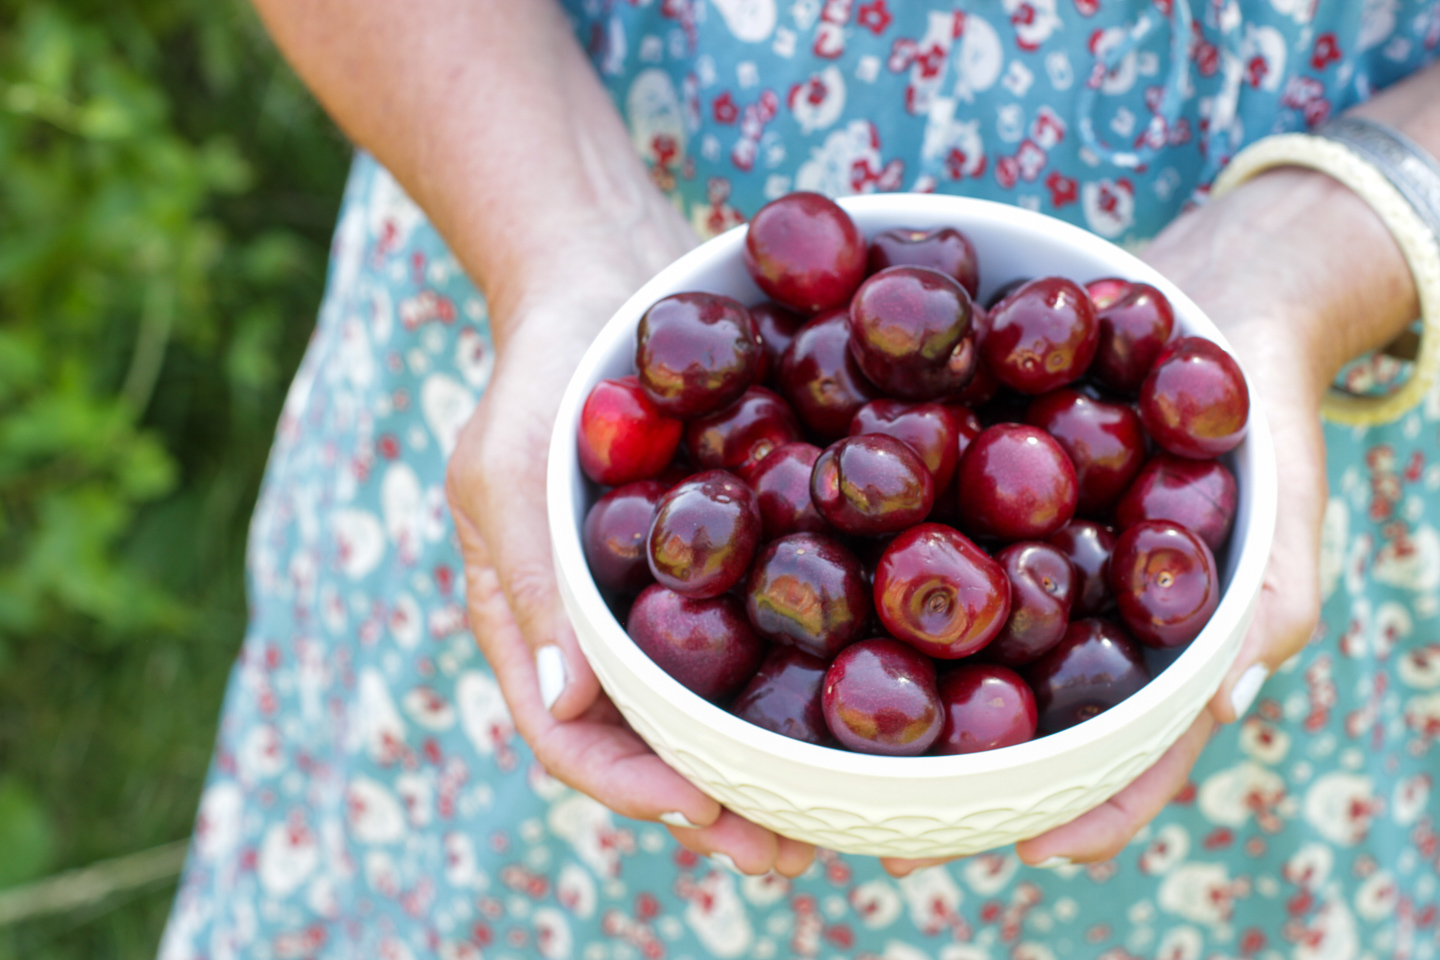 How to Preserve Cherries